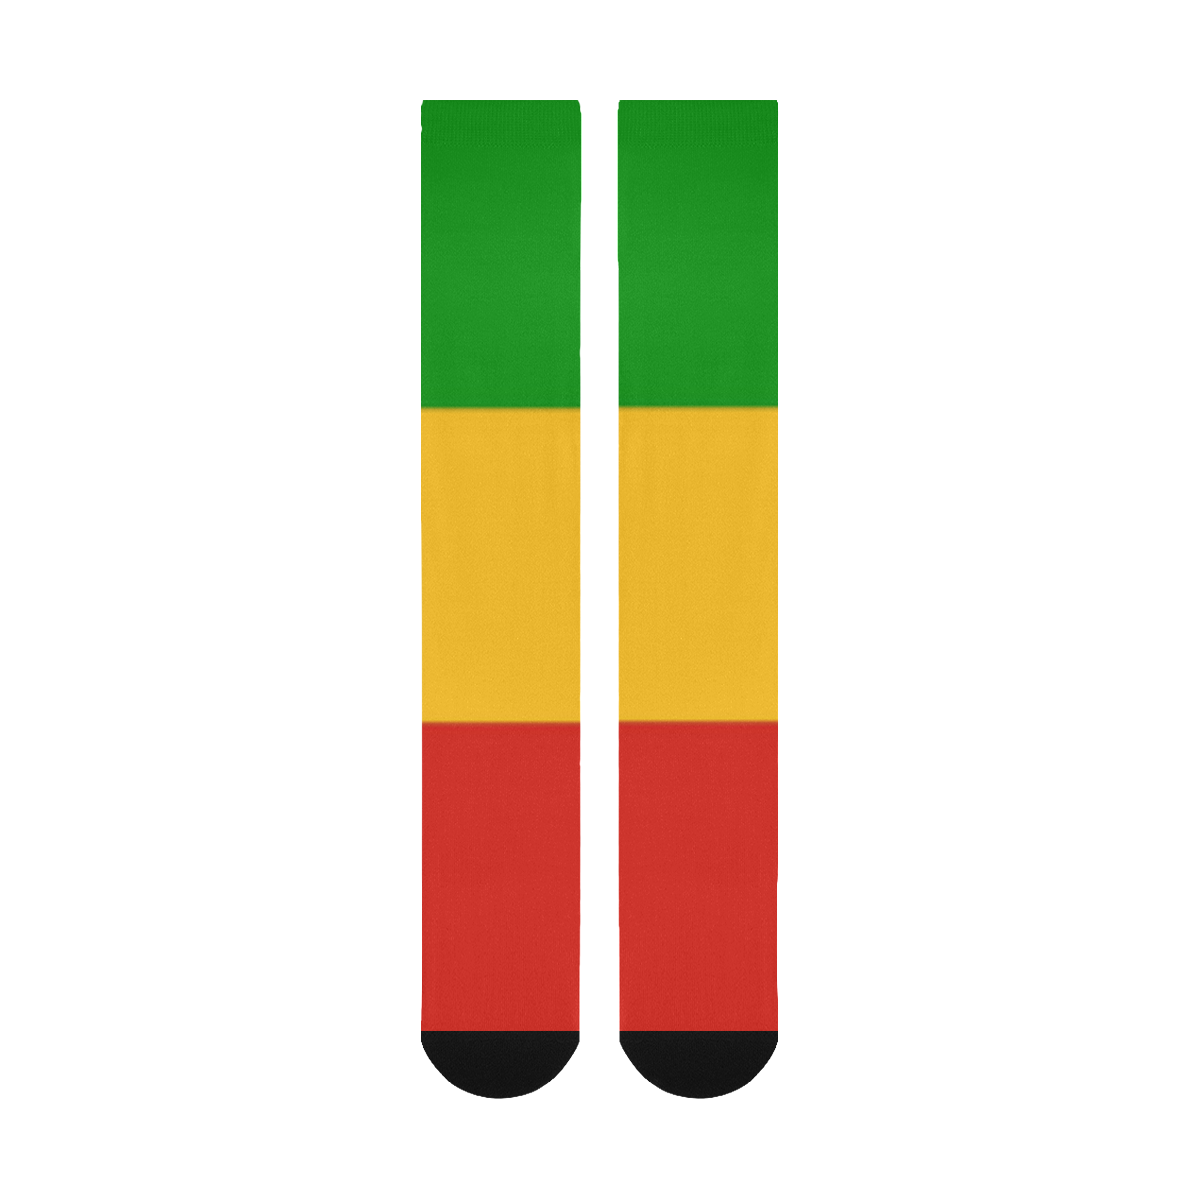 Rastafari Flag Colored Stripes Over-The-Calf Socks